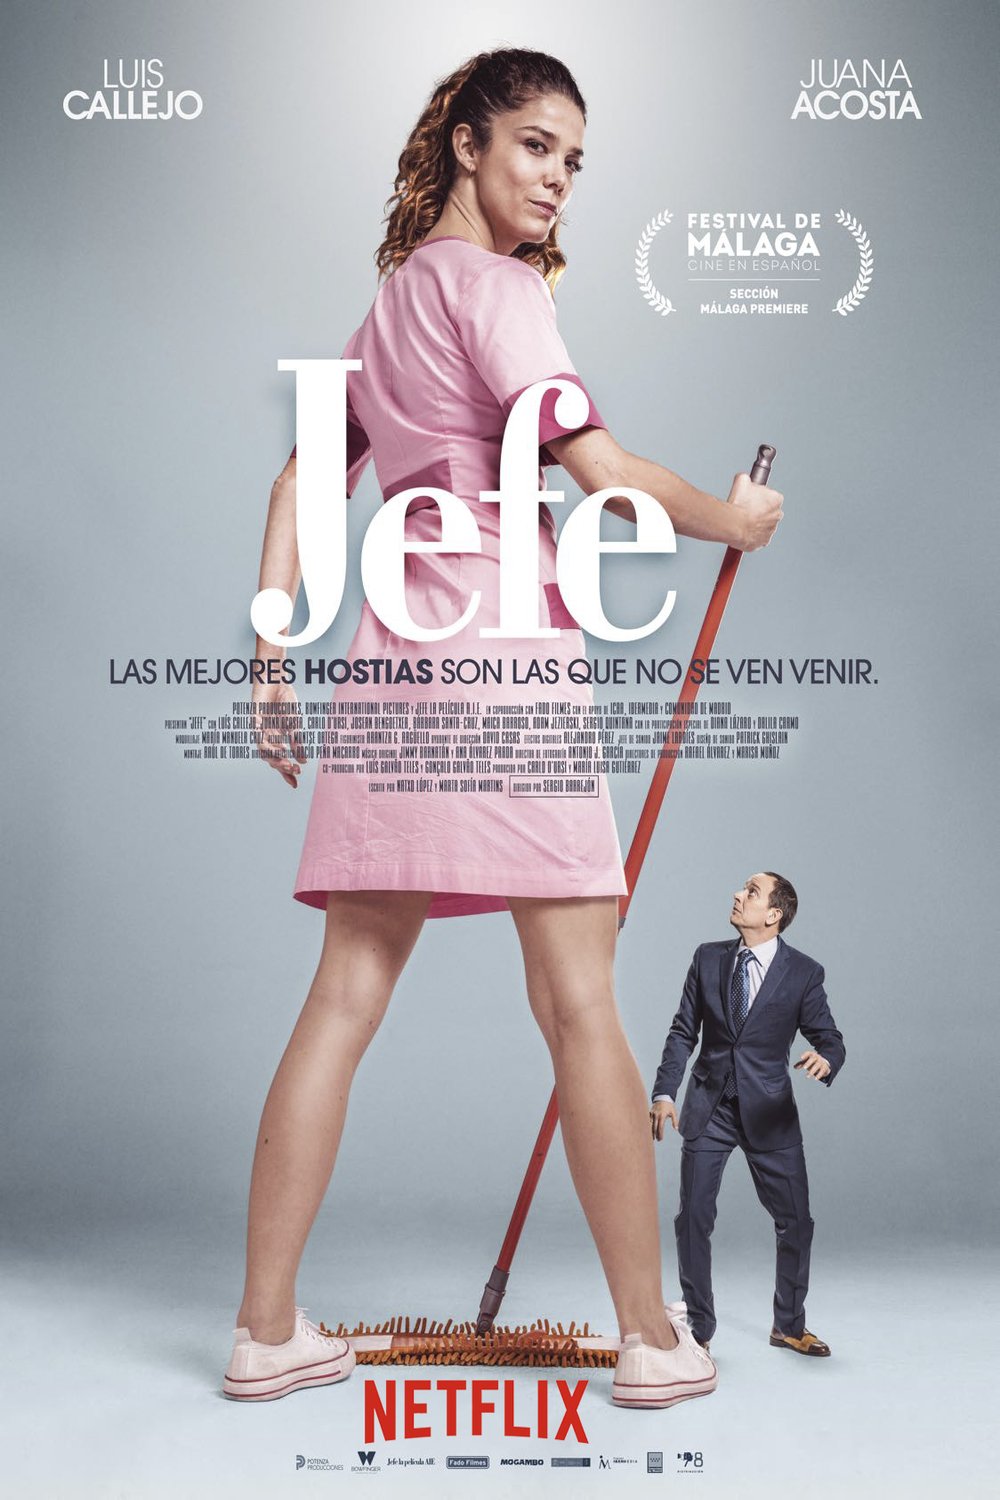 L'affiche originale du film Jefe en espagnol